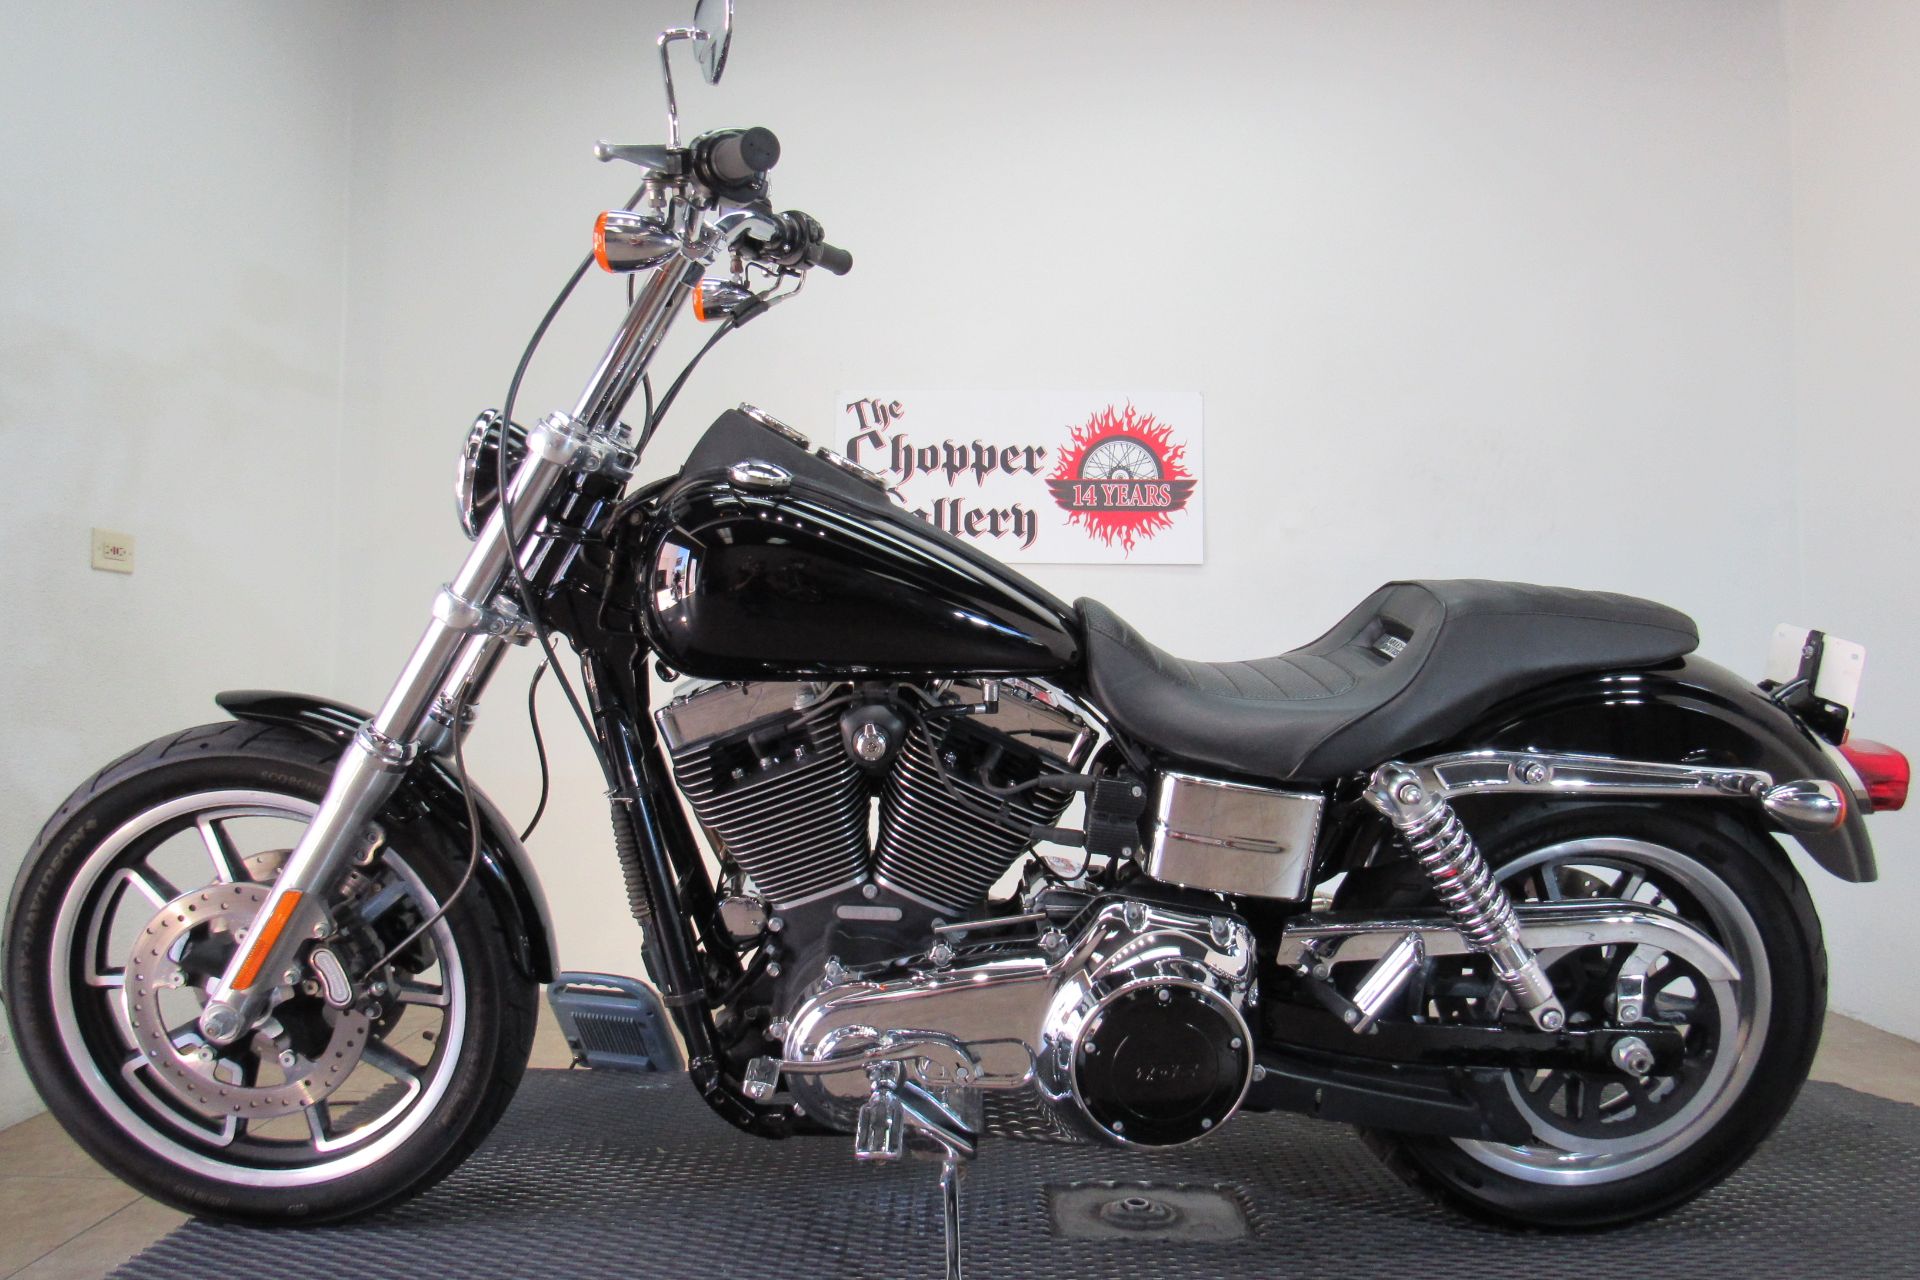 2014 Harley-Davidson Low Rider in Temecula, California - Photo 2